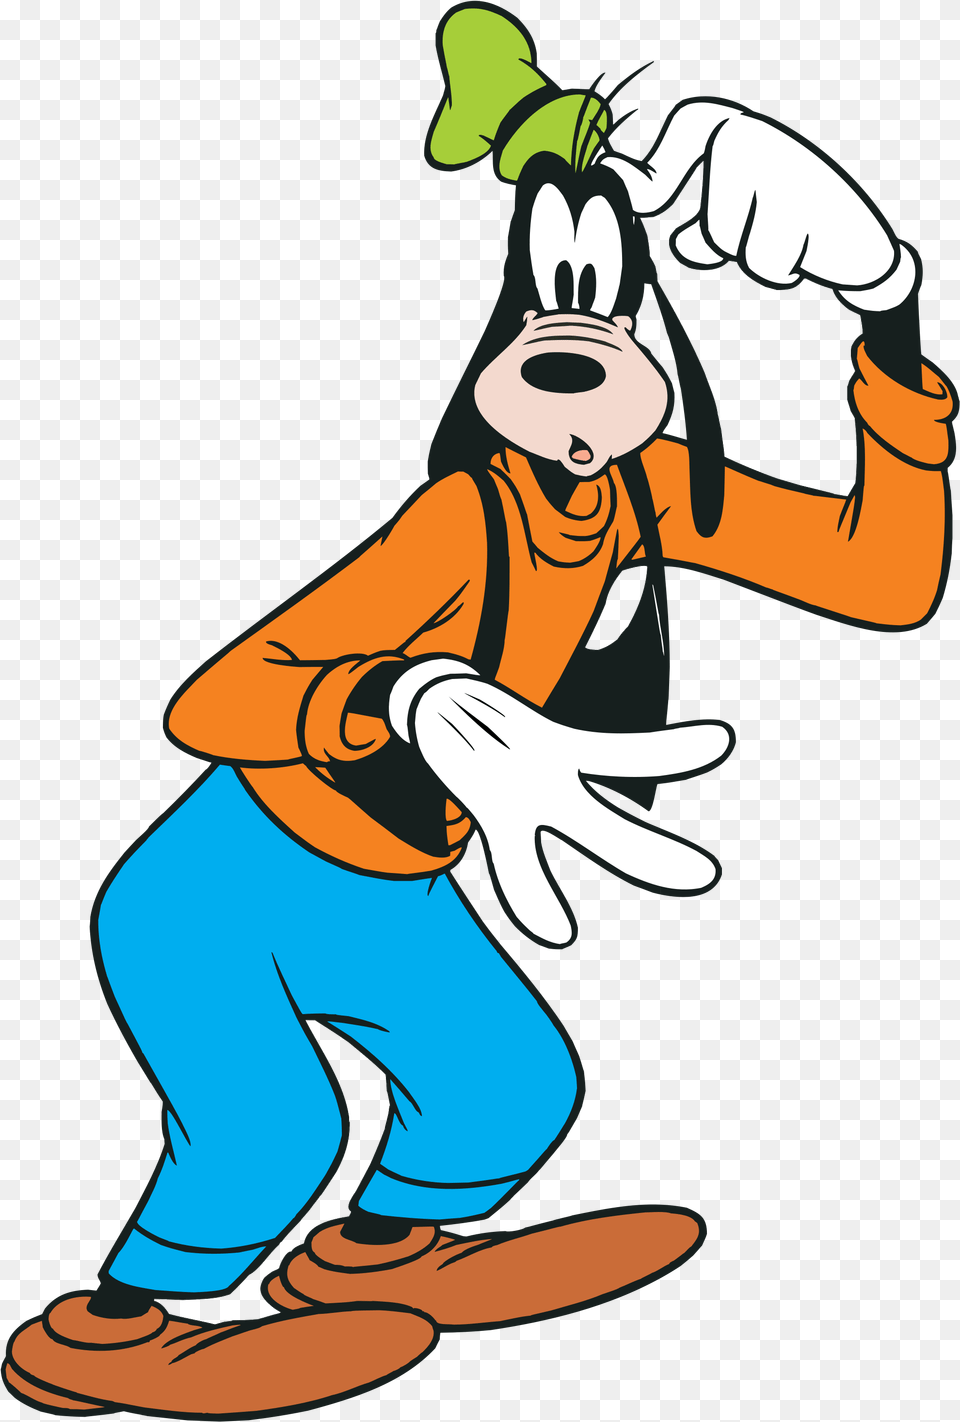 Goofy Download Goofy Disney, Cartoon, Person Png Image